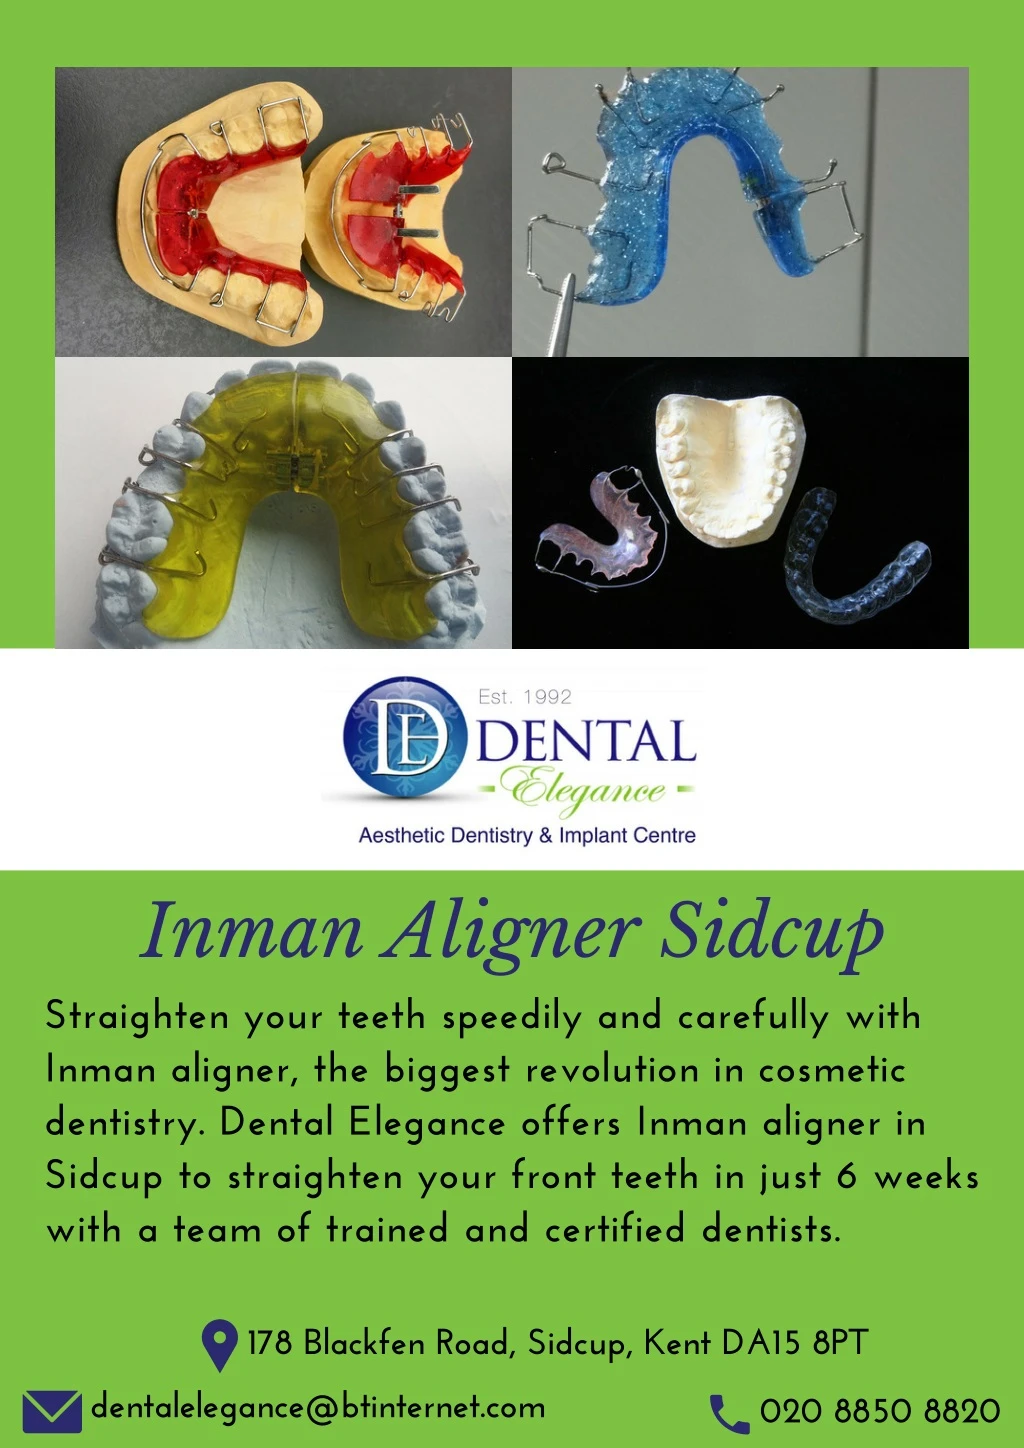 inman aligner sidcup straighten your teeth